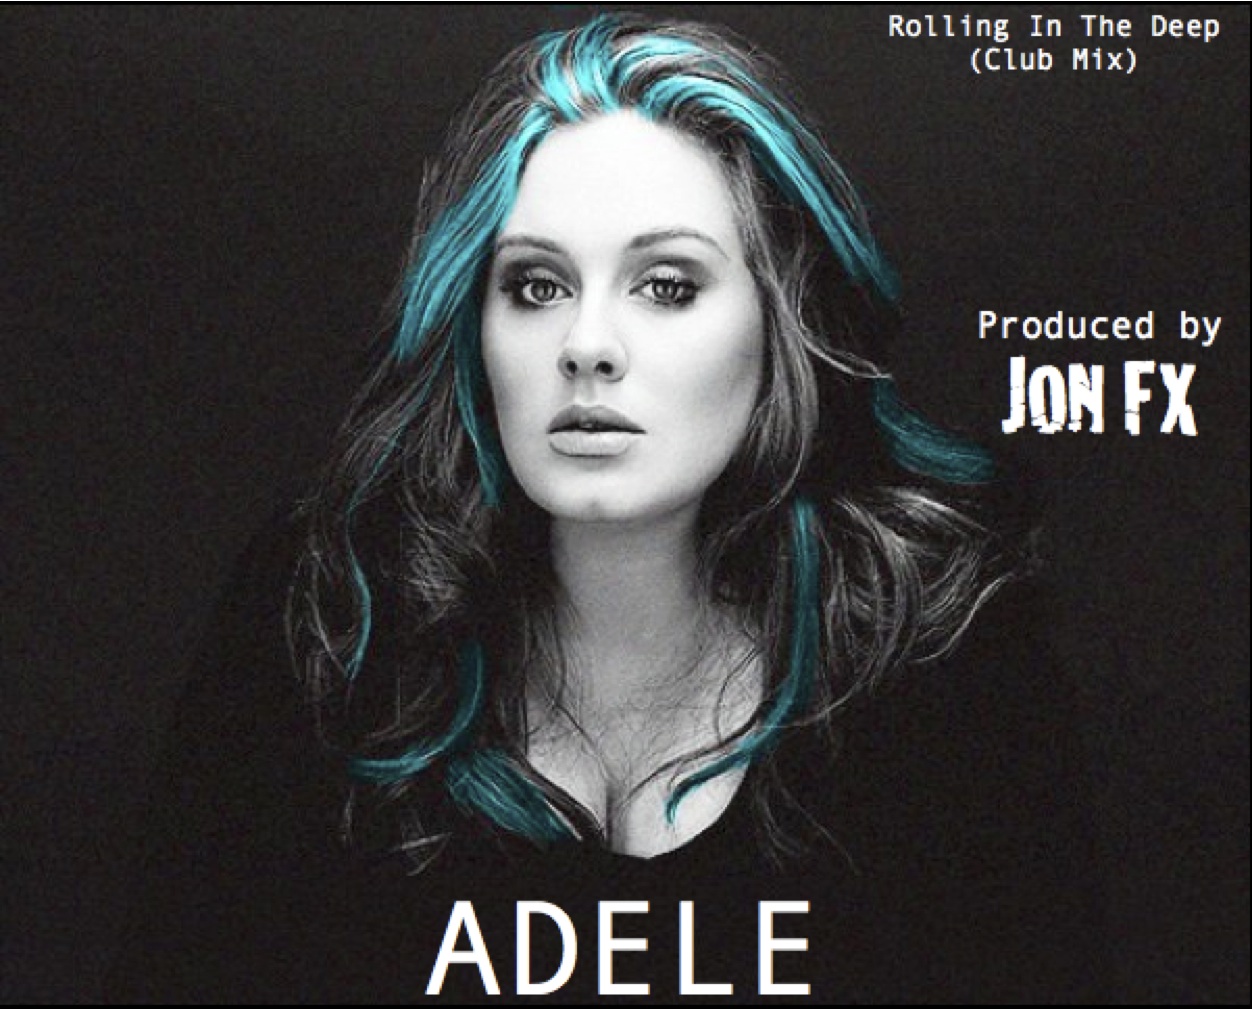 http://2.bp.blogspot.com/-74DkpPVKwFY/Td5ZsTW-xlI/AAAAAAAADKA/x8_68ygVrLs/s1600/Adele+Album+With+JonFX.jpg